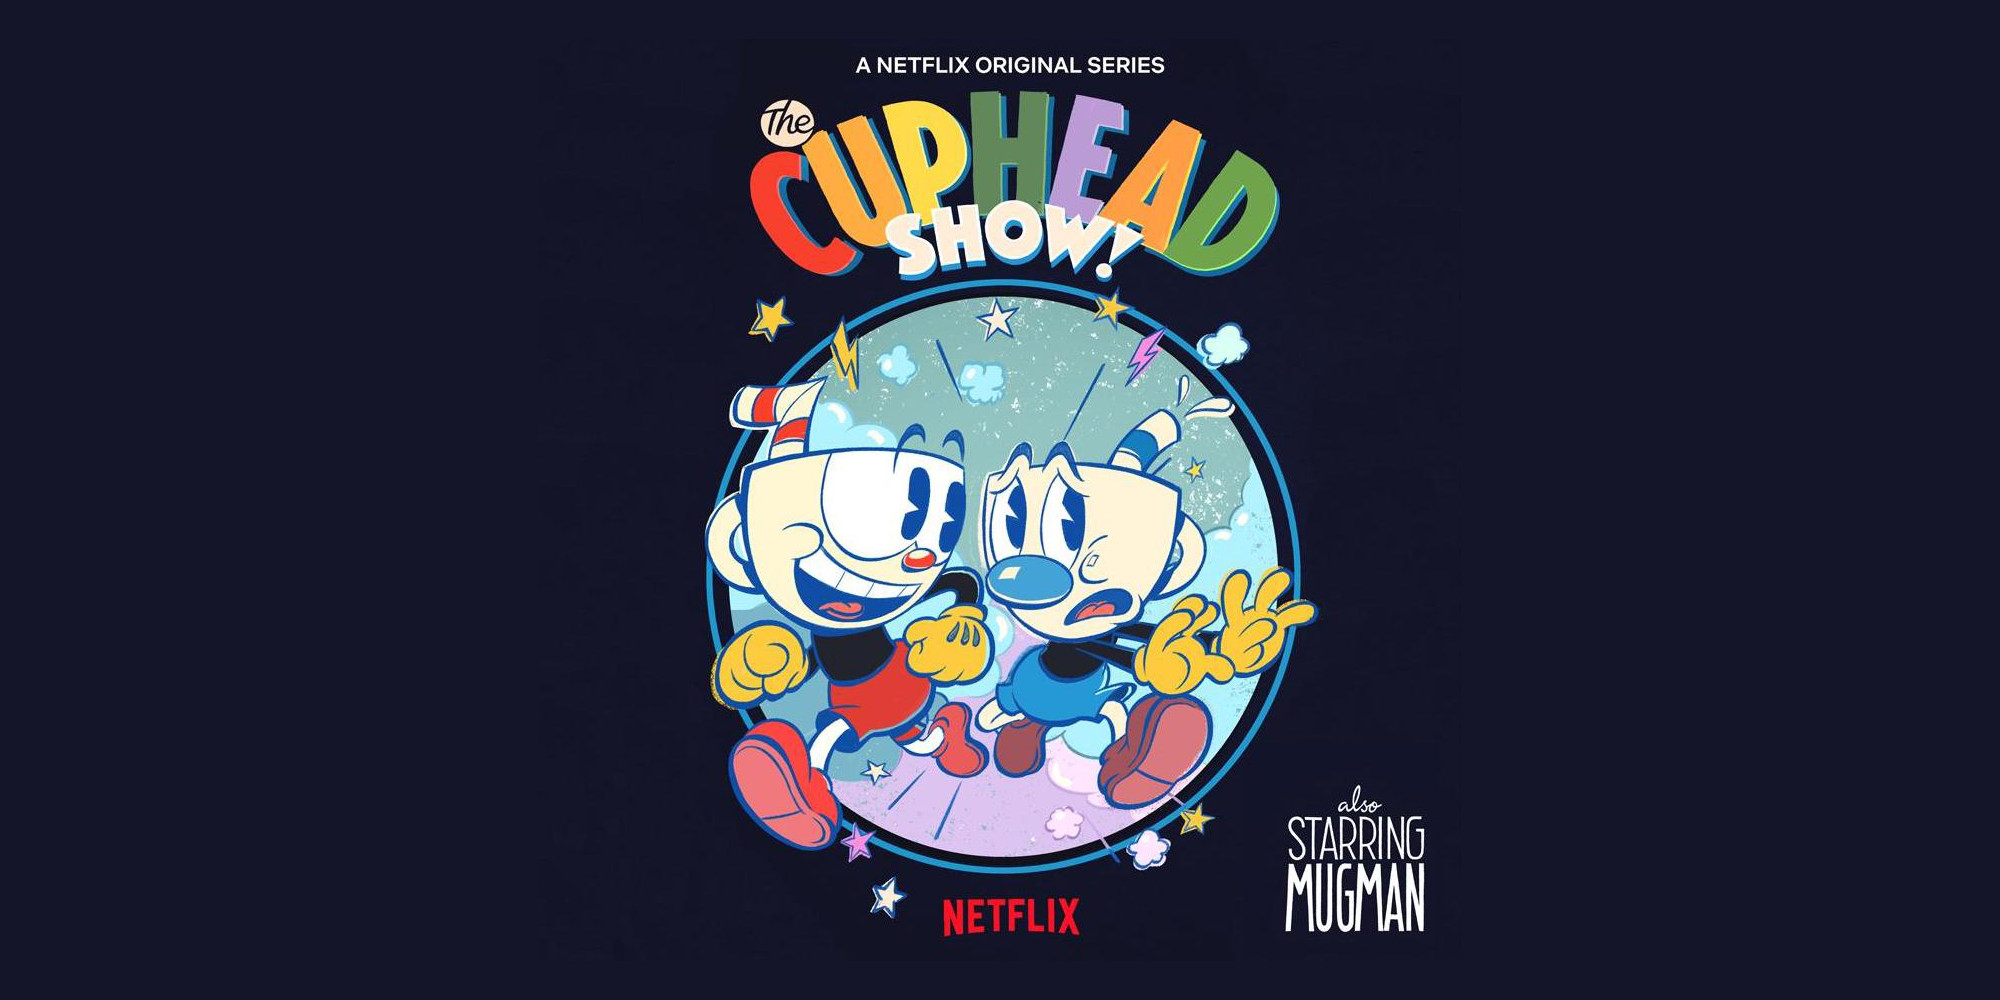 The Cuphead Show Season 3 Trailer Previews Hunt for Mugman